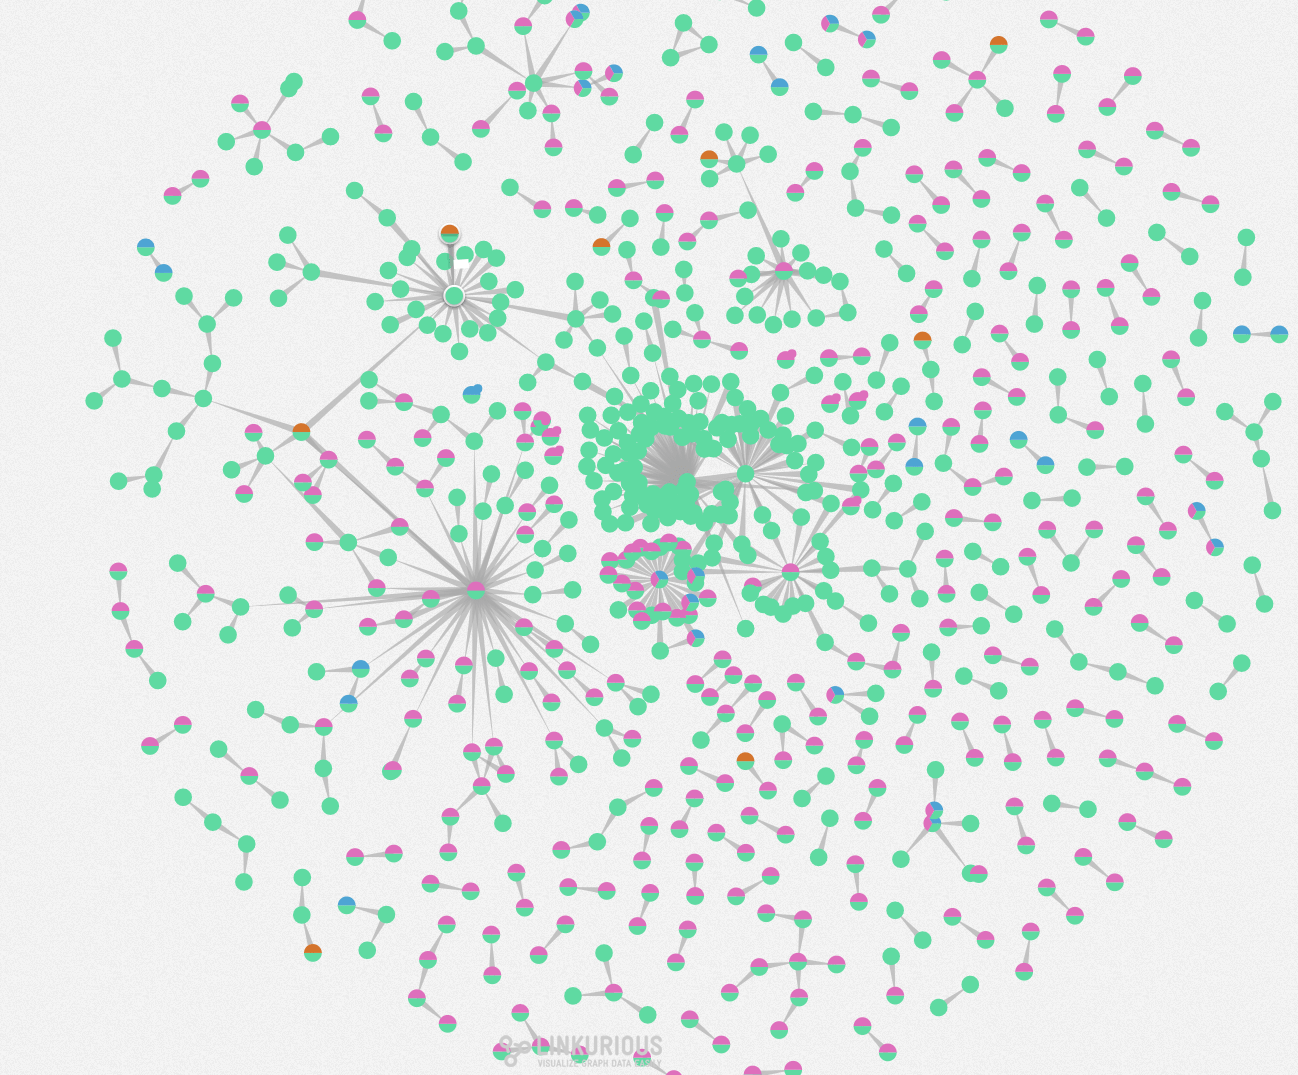 trump political network visualization